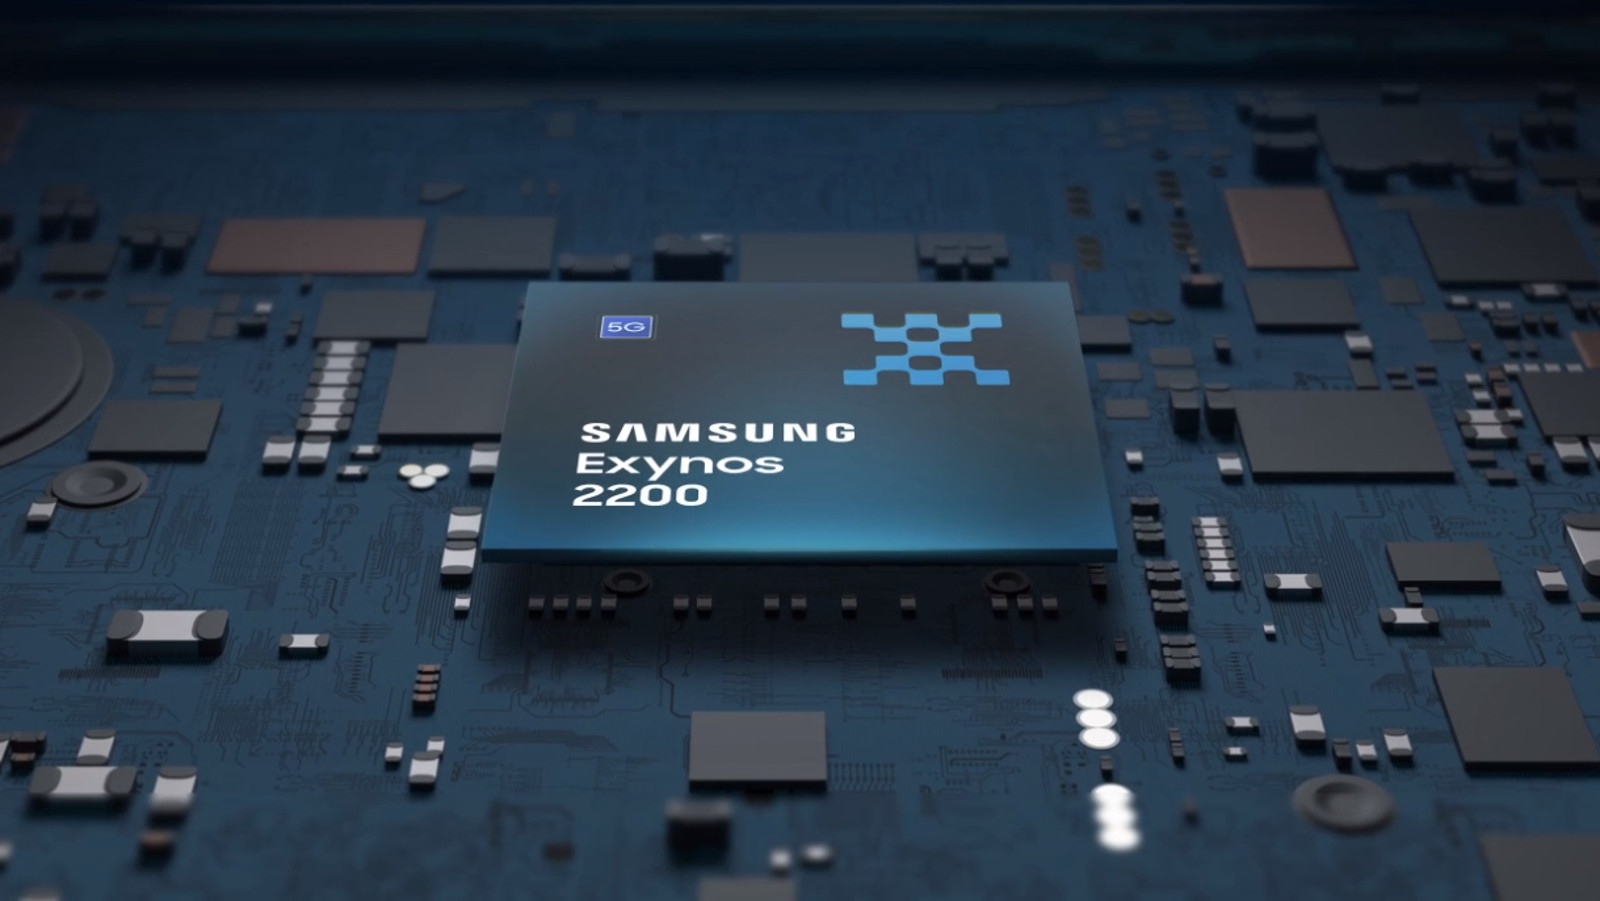 The Samsung Exynos 2200 chipset.